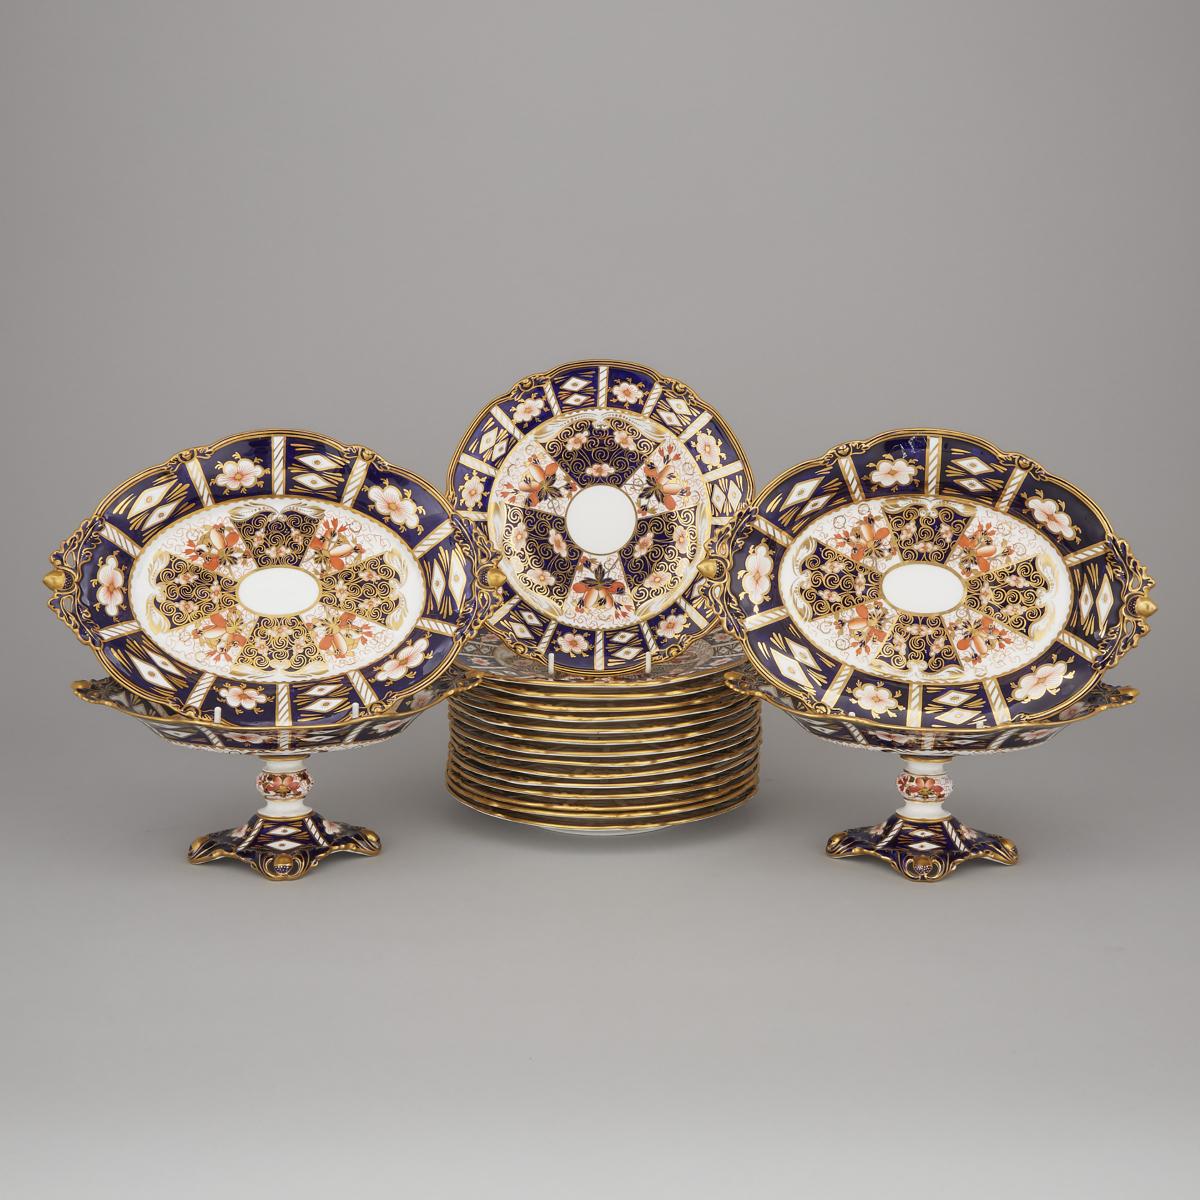 Royal Crown Derby 'Imari' (8731) Pattern Dessert Service, 20th century, plate diameter 8.9 in — 22.7